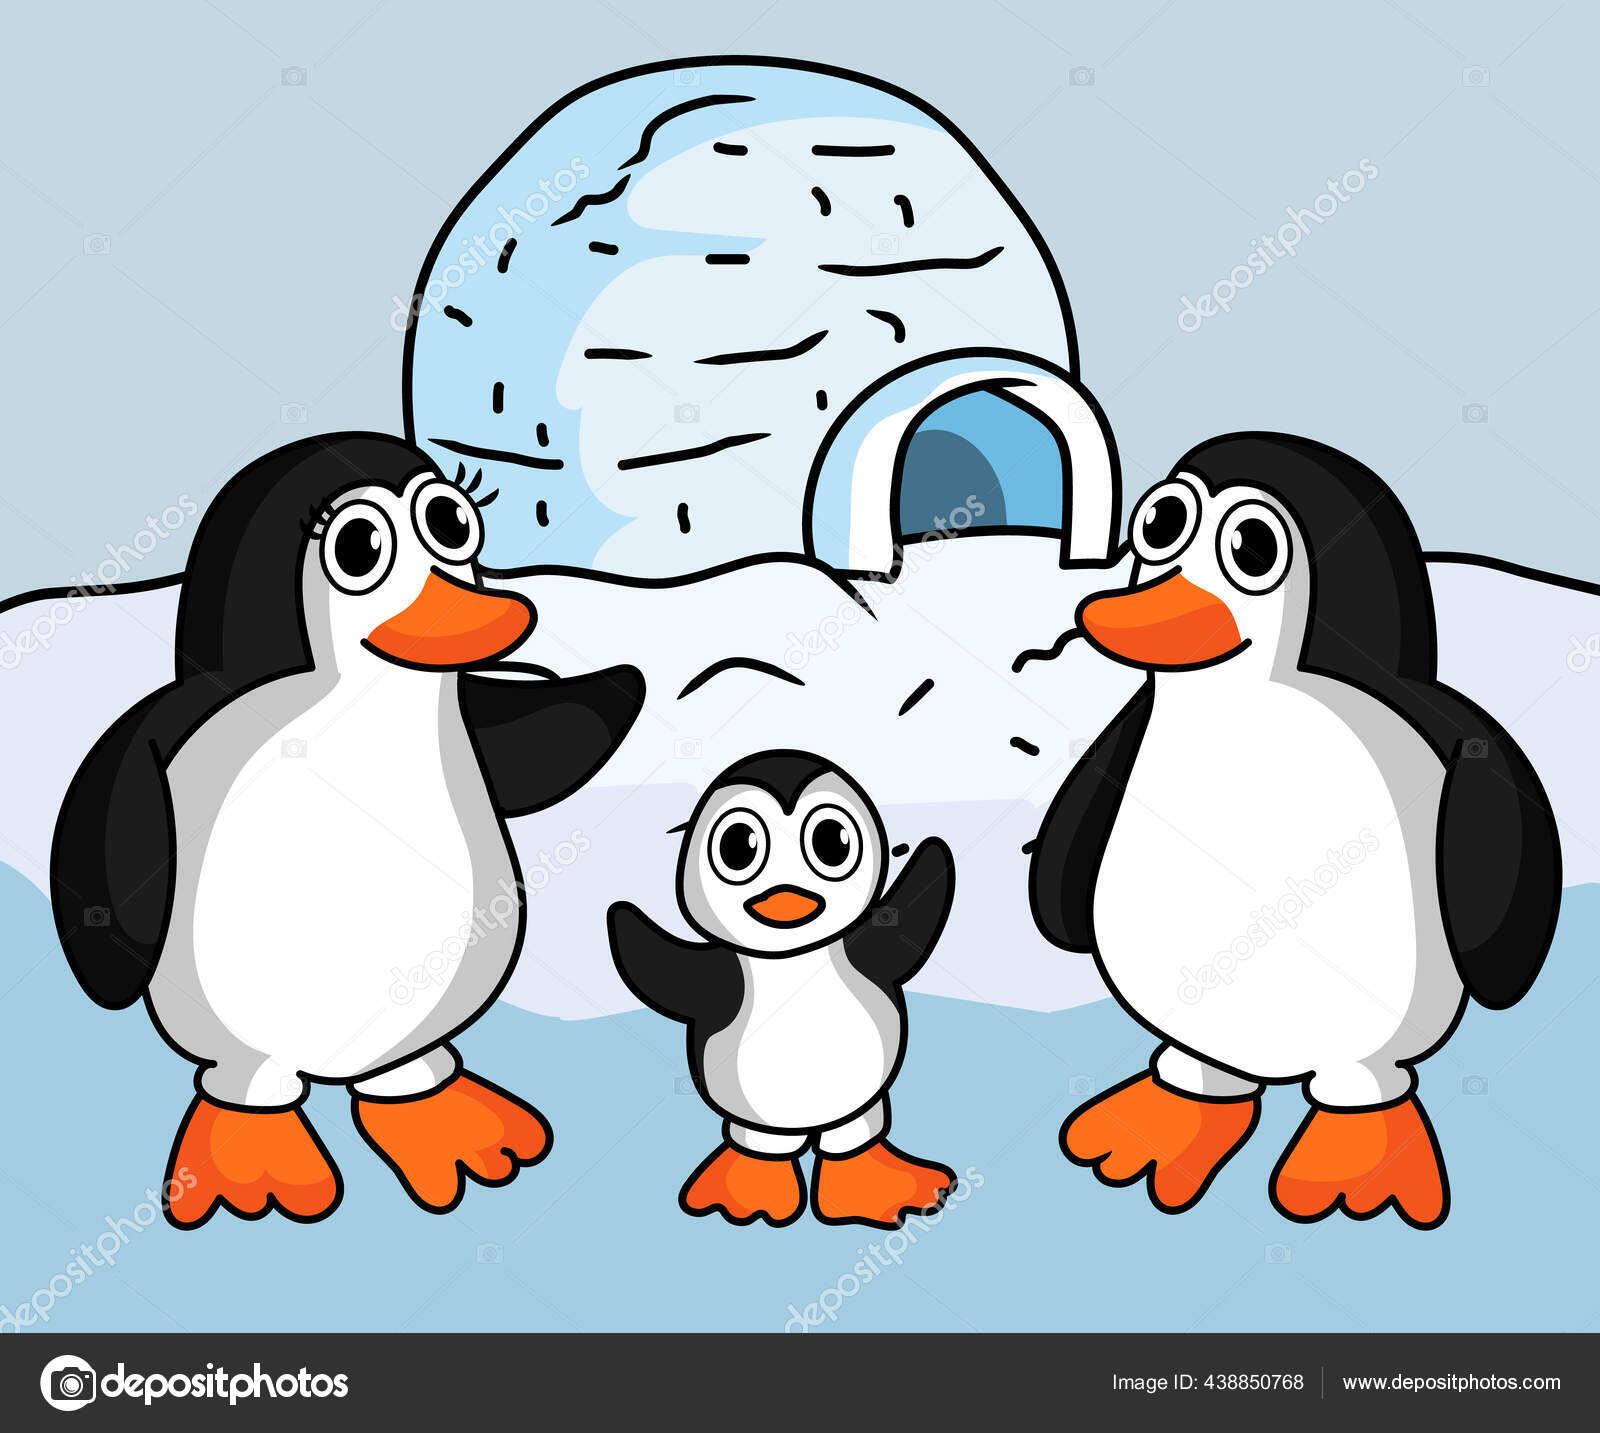 Penguins - The Igloo